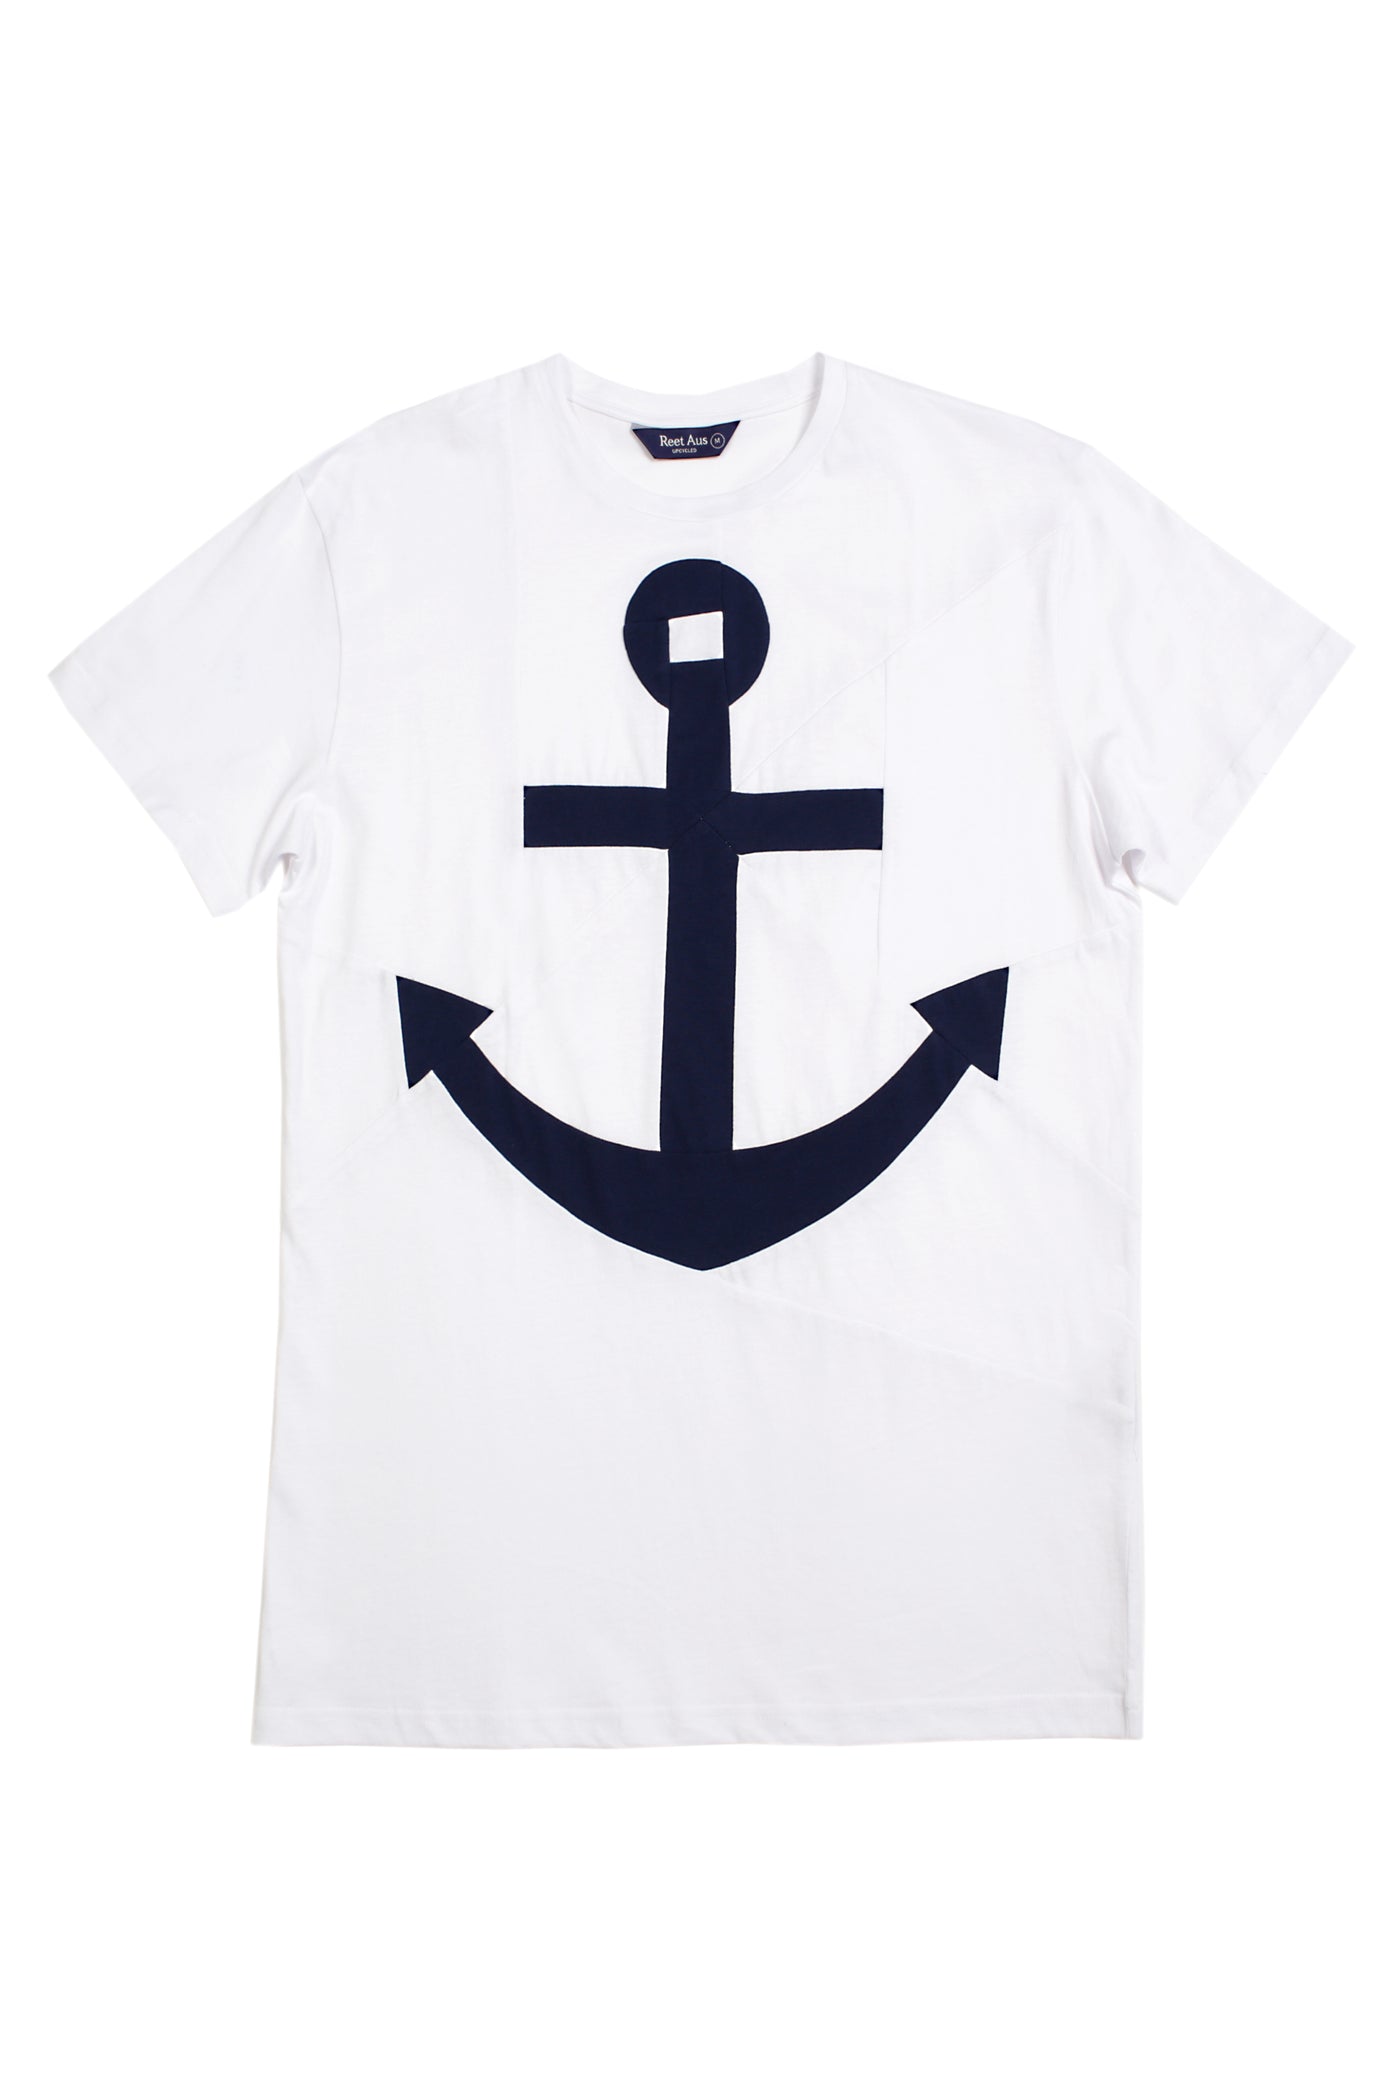 Up-shirt for men, anchor motif | White, dark blue - Reet Aus